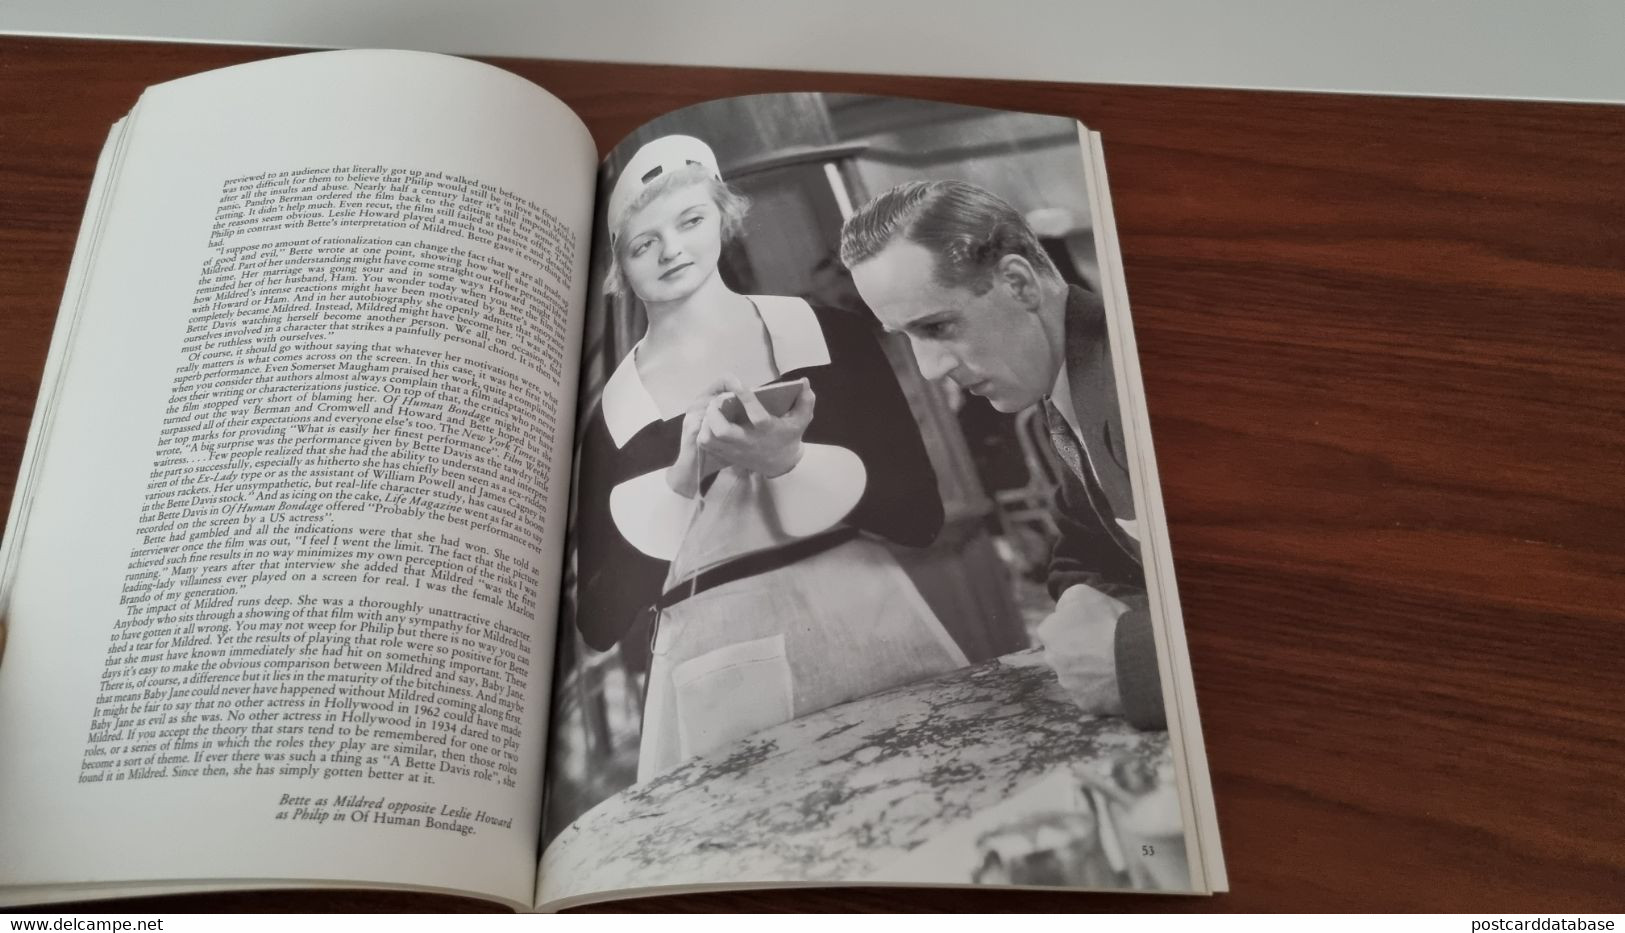 Bette Davis Her Film And Stage Career - Jeffrey Robinson - Film